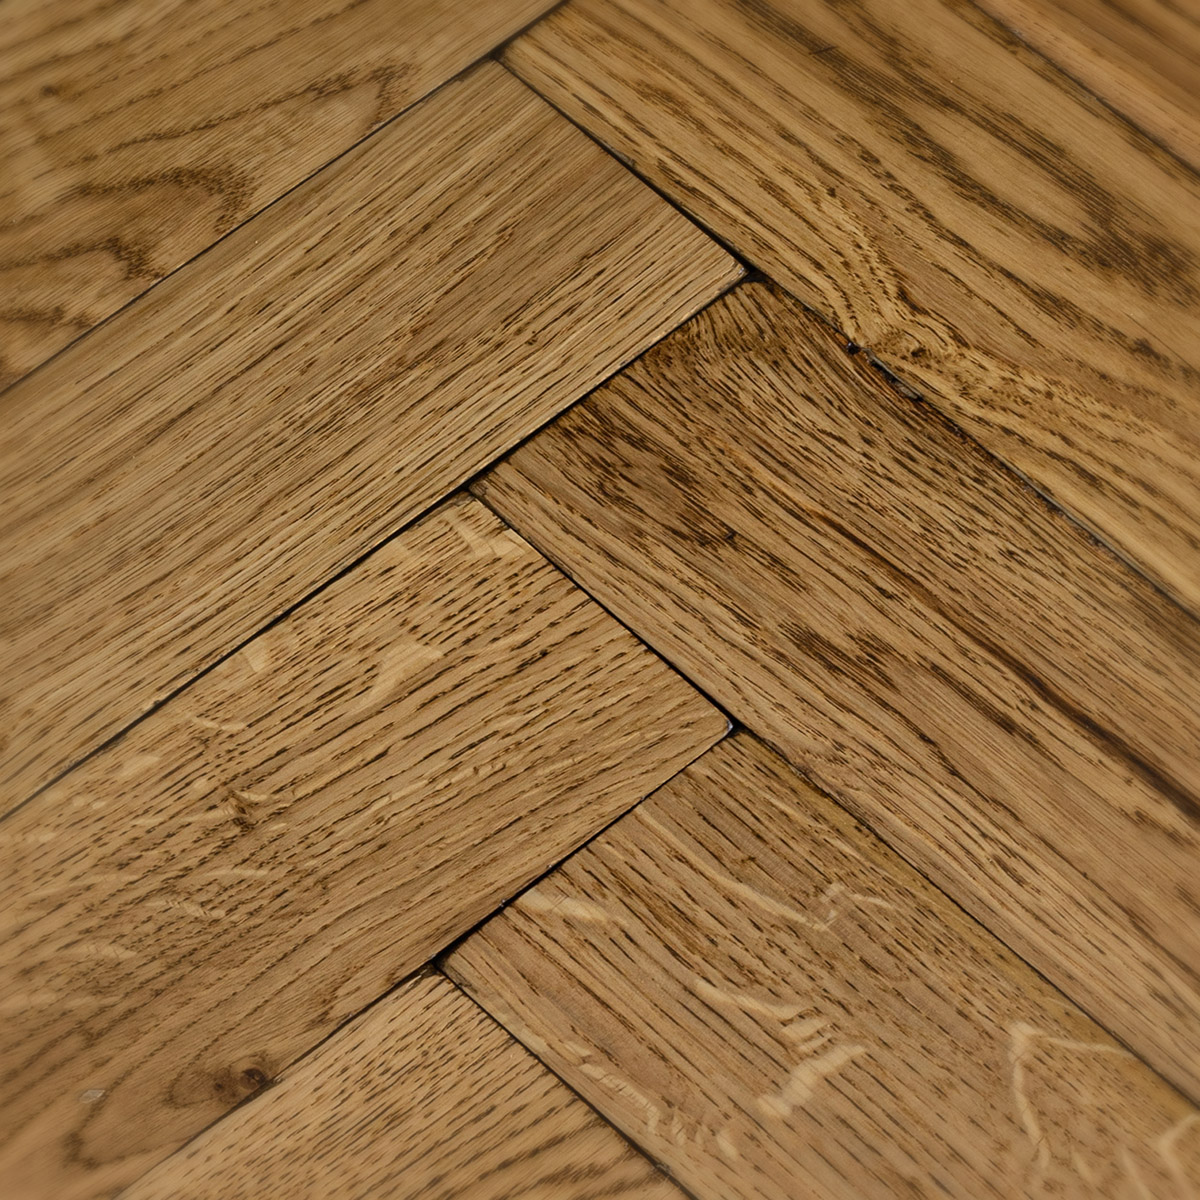 Arden - Solid Oak Polished Herringbone Floor